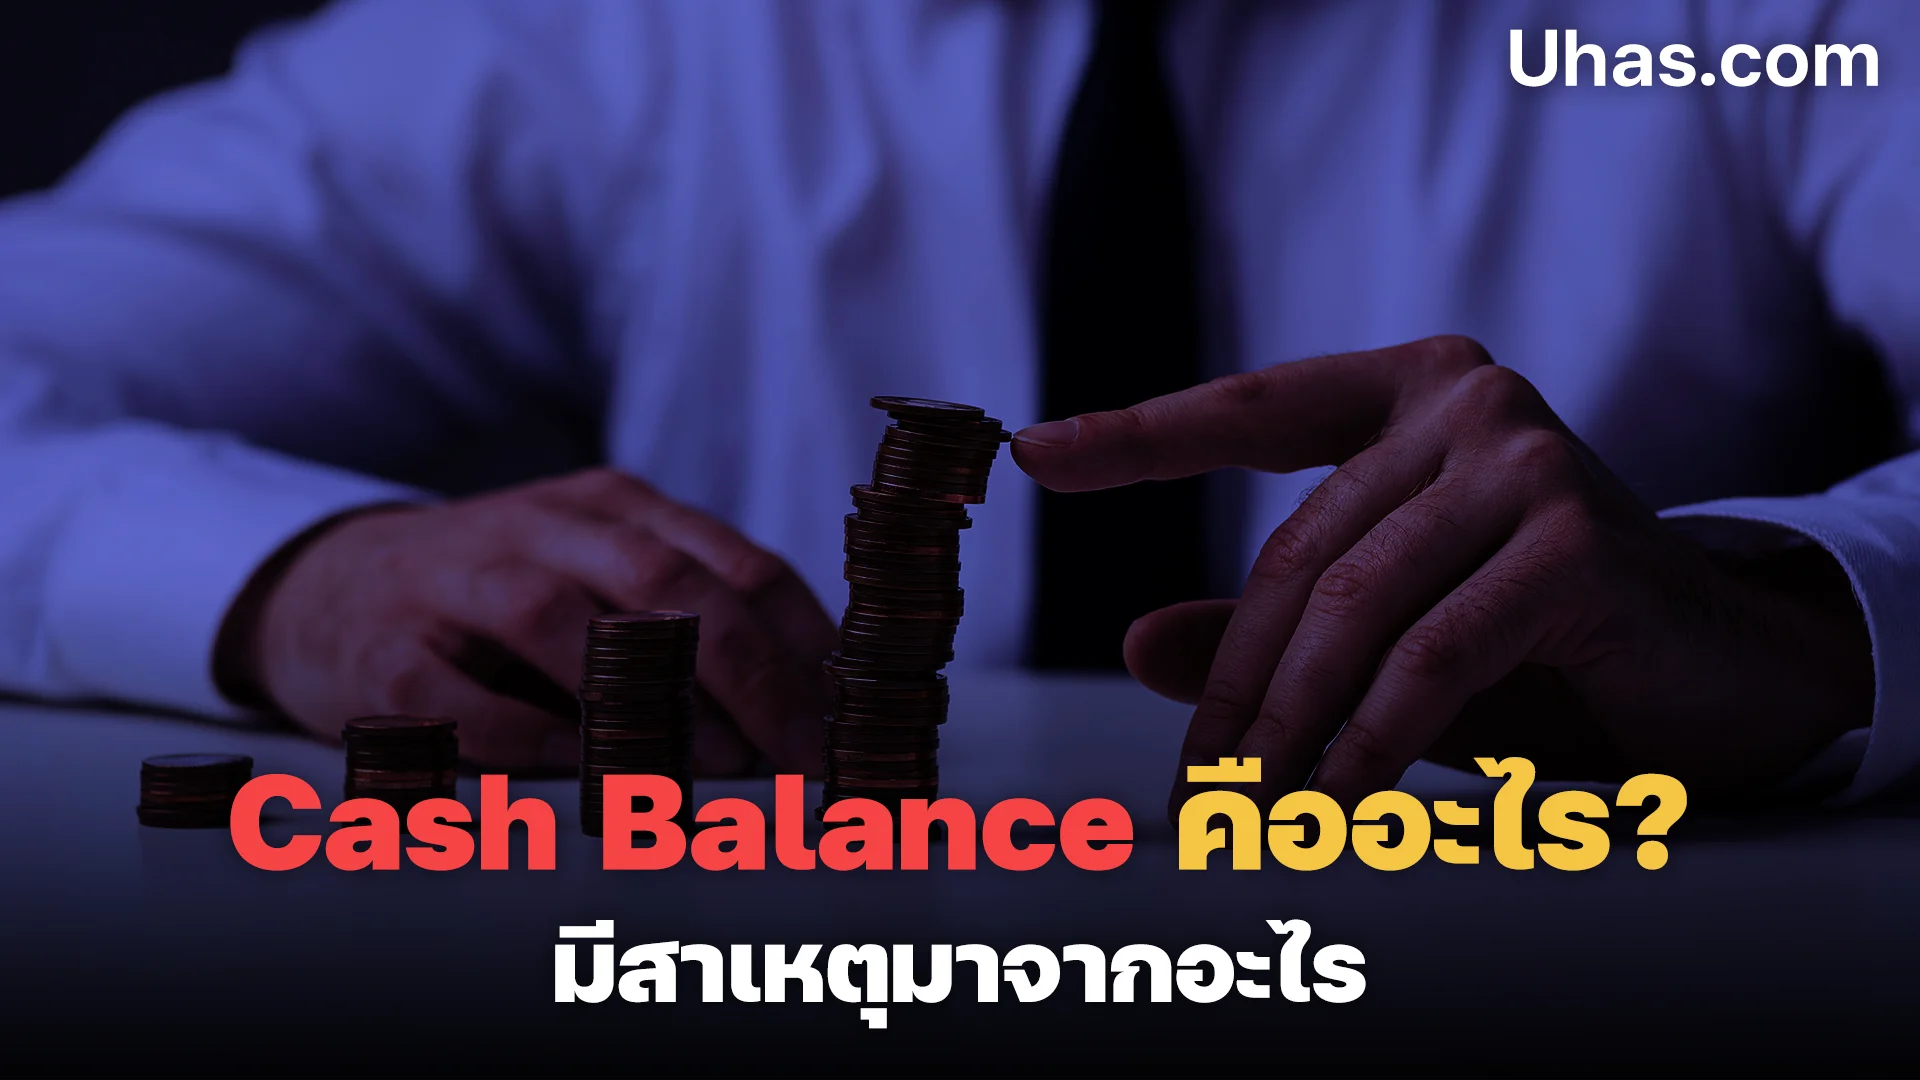 Cash Balance คืออะไรมีสาเหตุมาจากอะไร